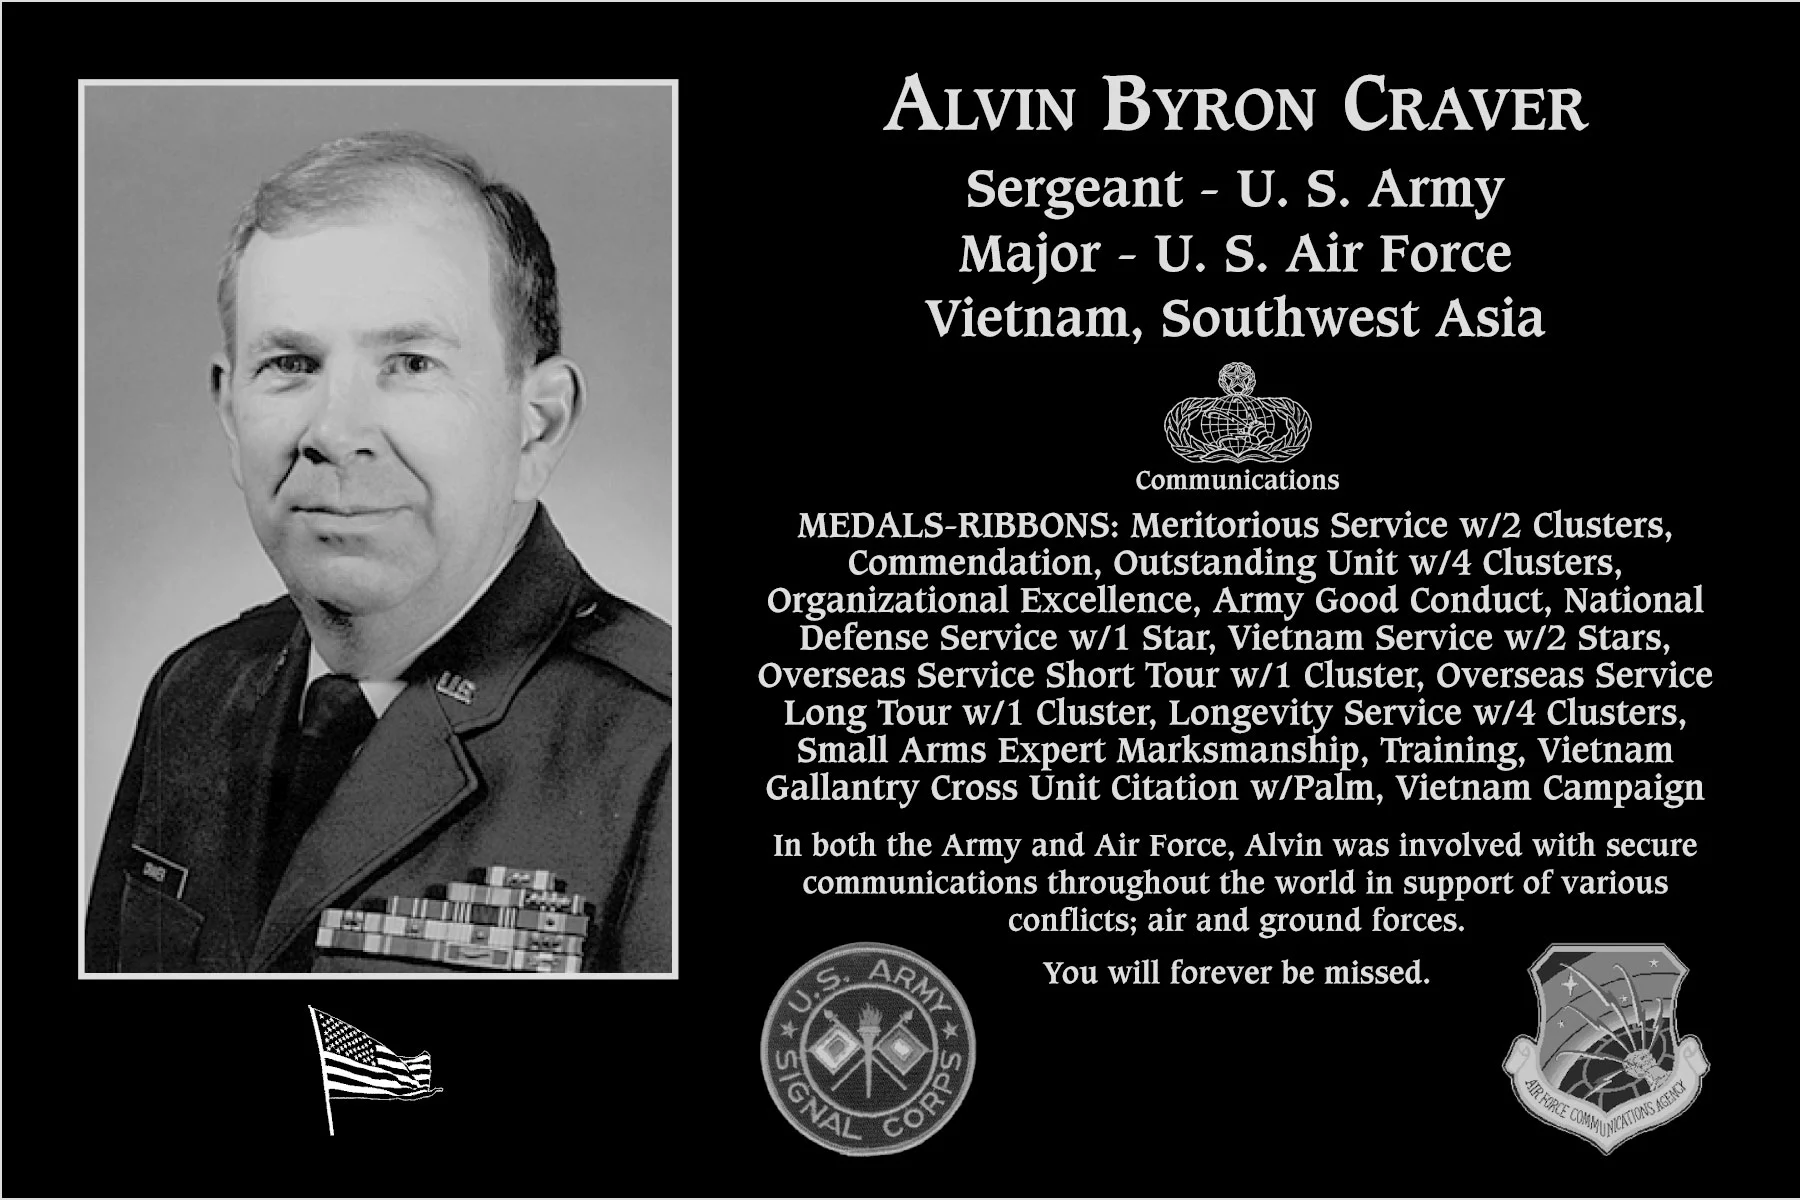 Alvin Byron Craver